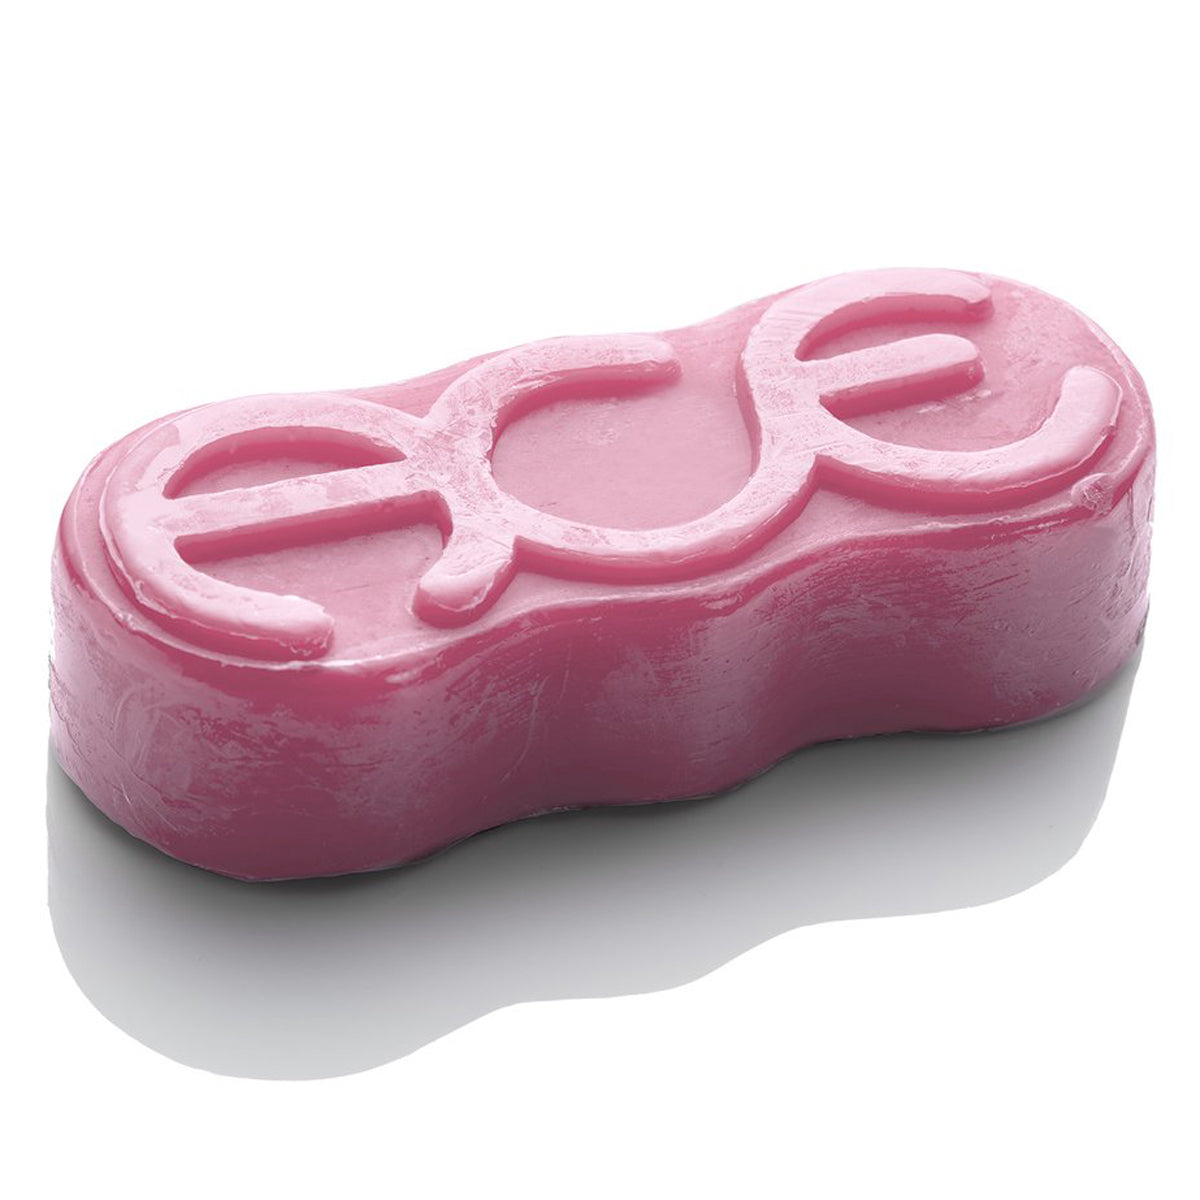 Ace Rings Skate Wax - Pink image 1